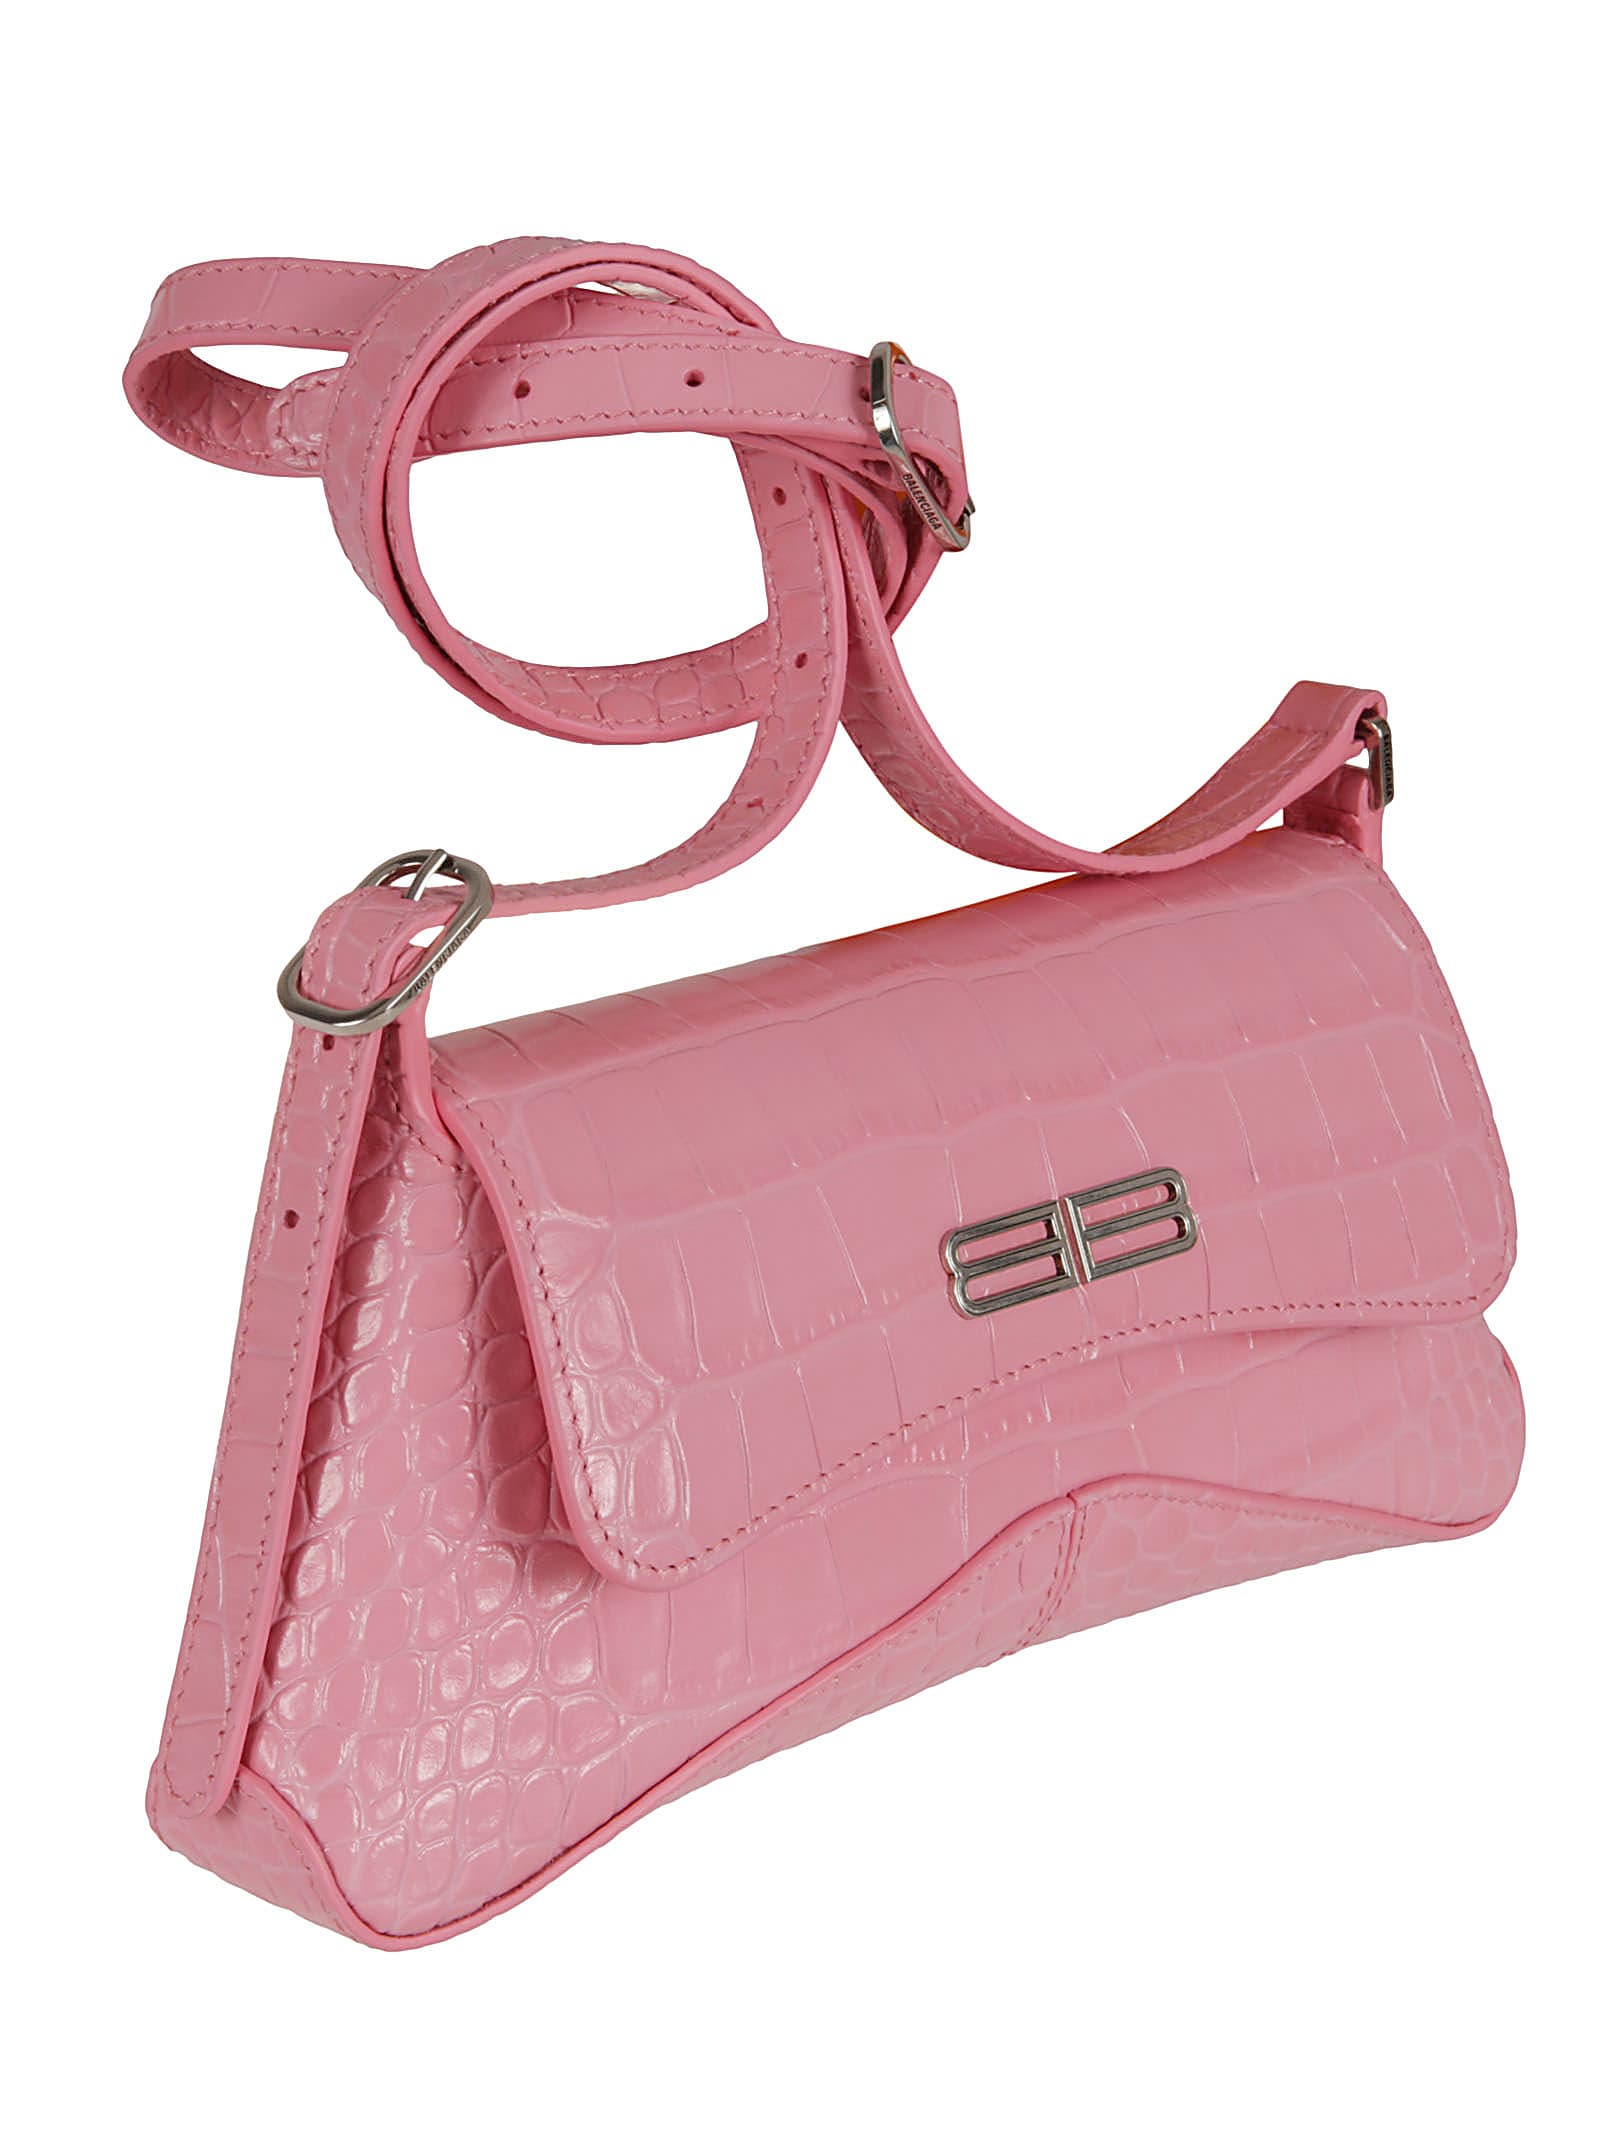 Balenciaga XX Small Flap Shoulder Bag in Sweet Pink